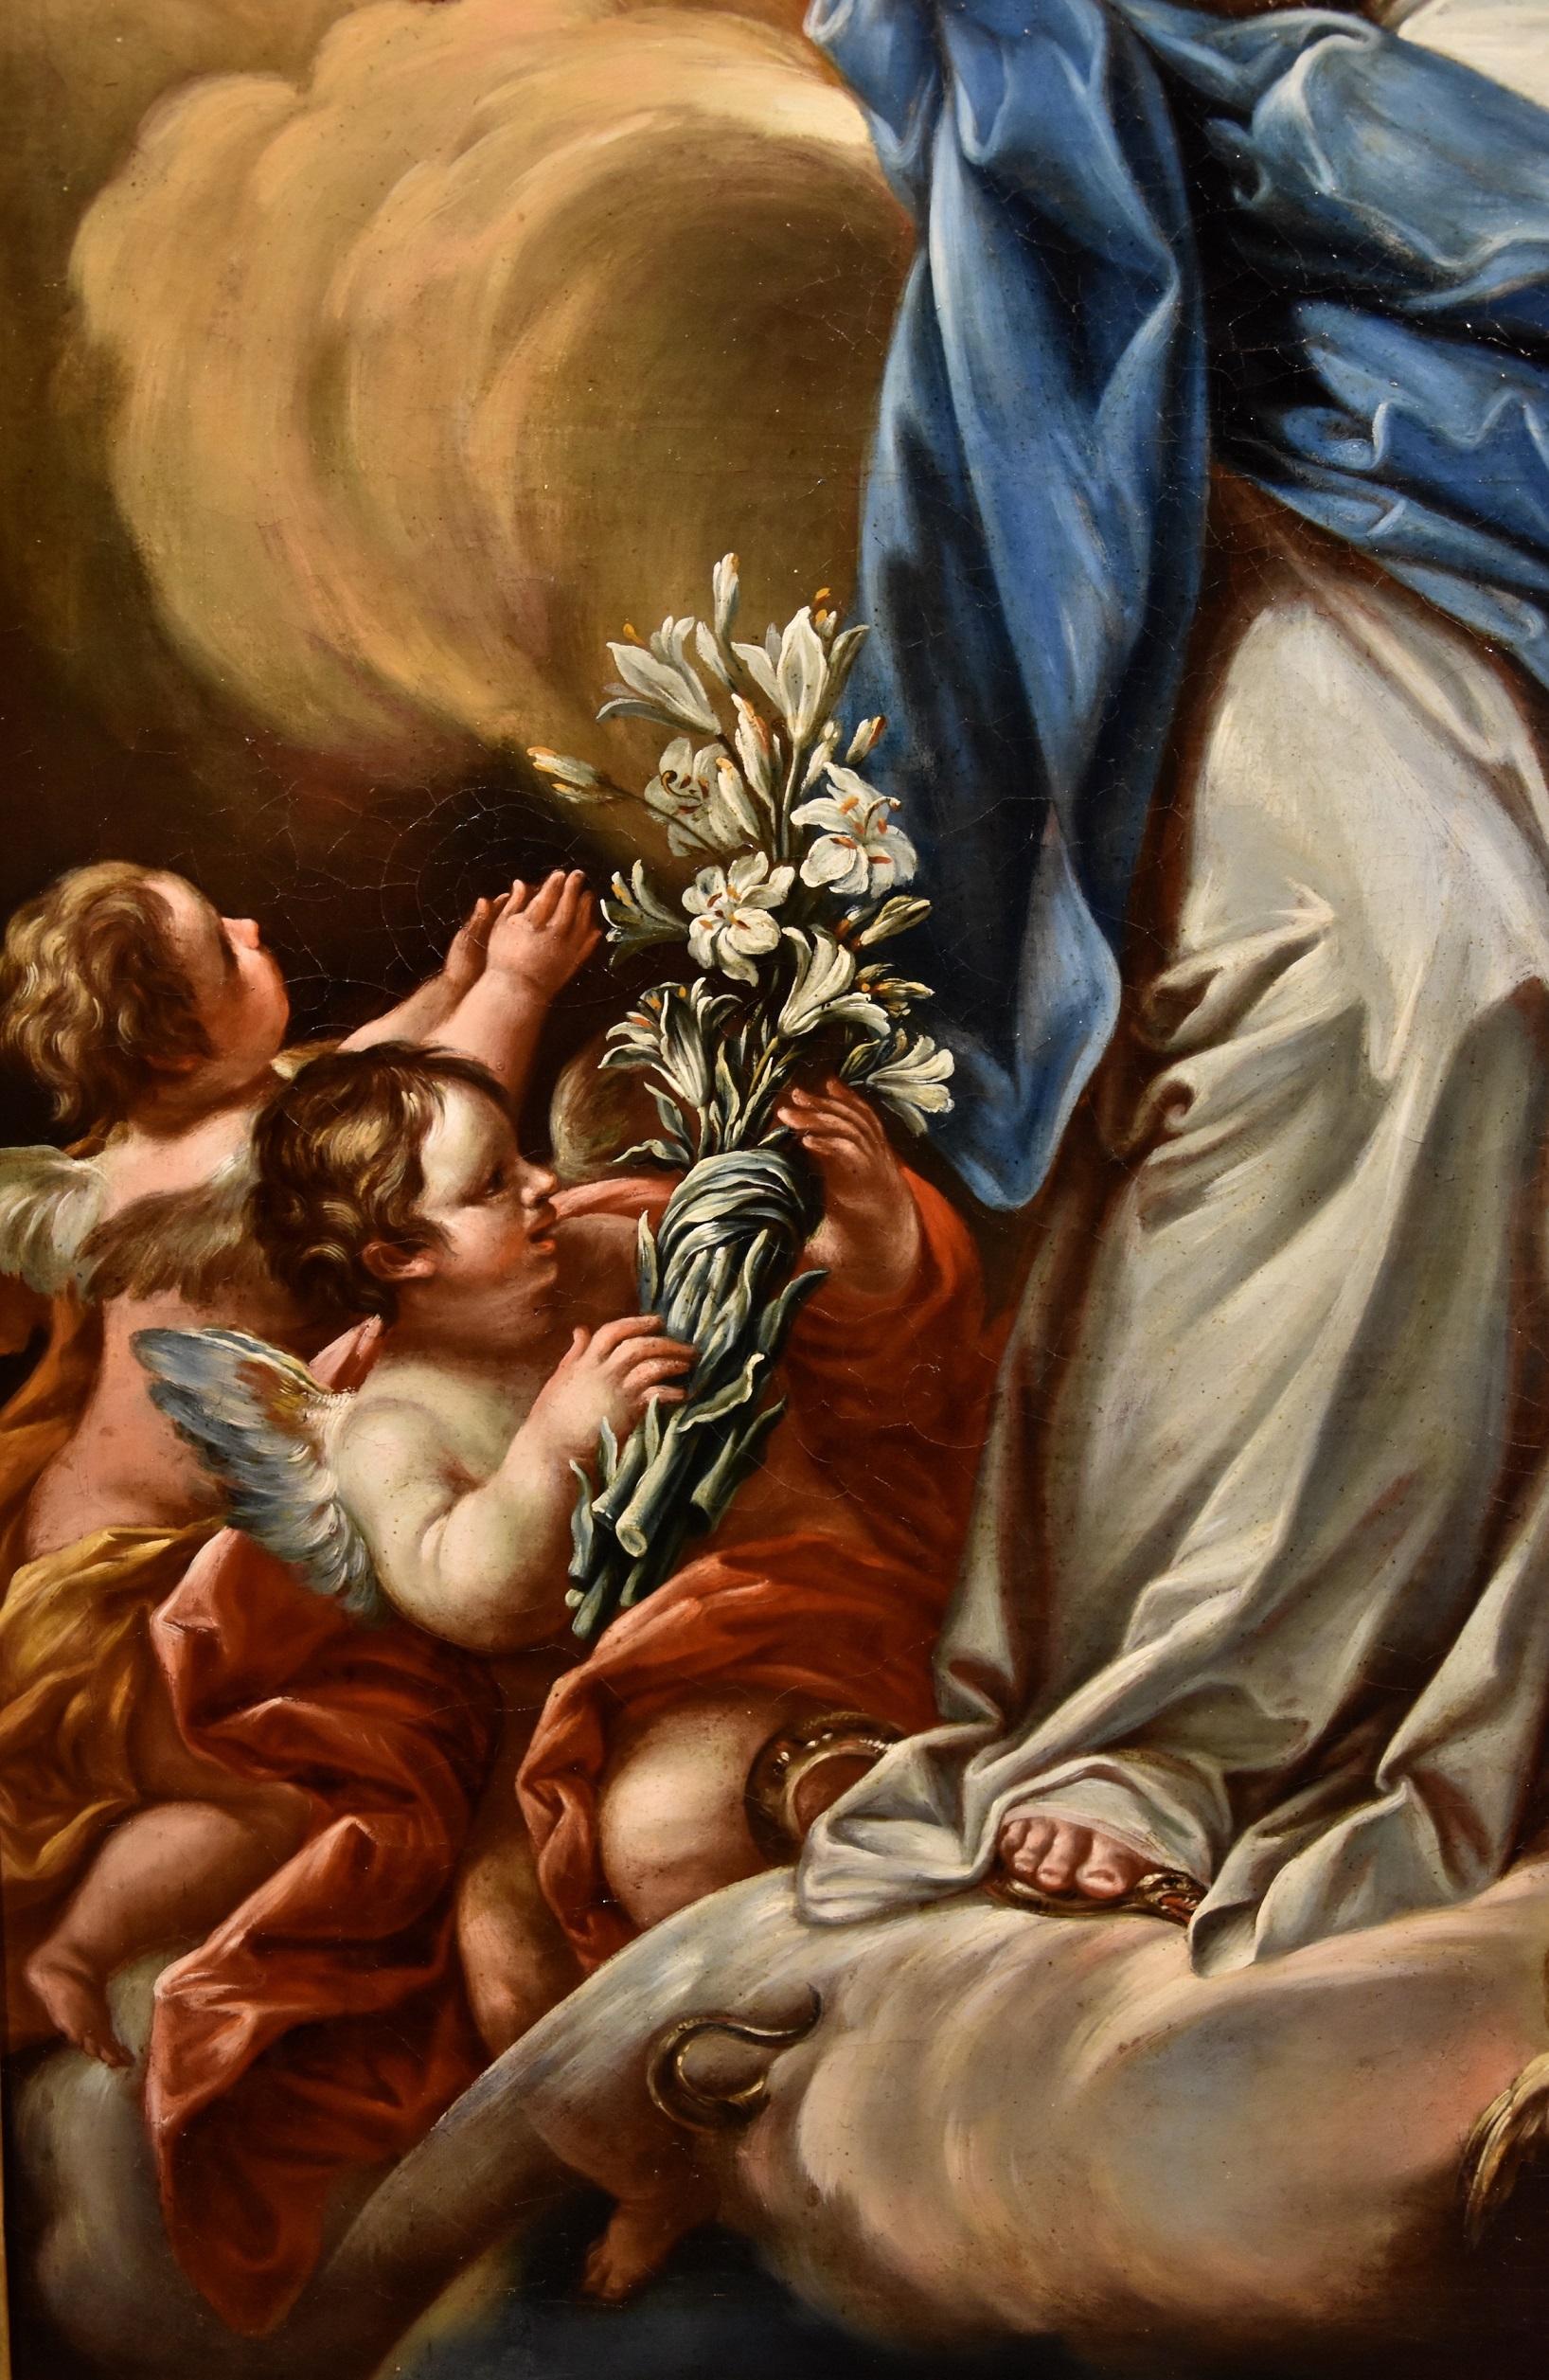 Immaculate Virgin Madonna Brandi Paint Oil on canvas Old master 17th Century Art 5